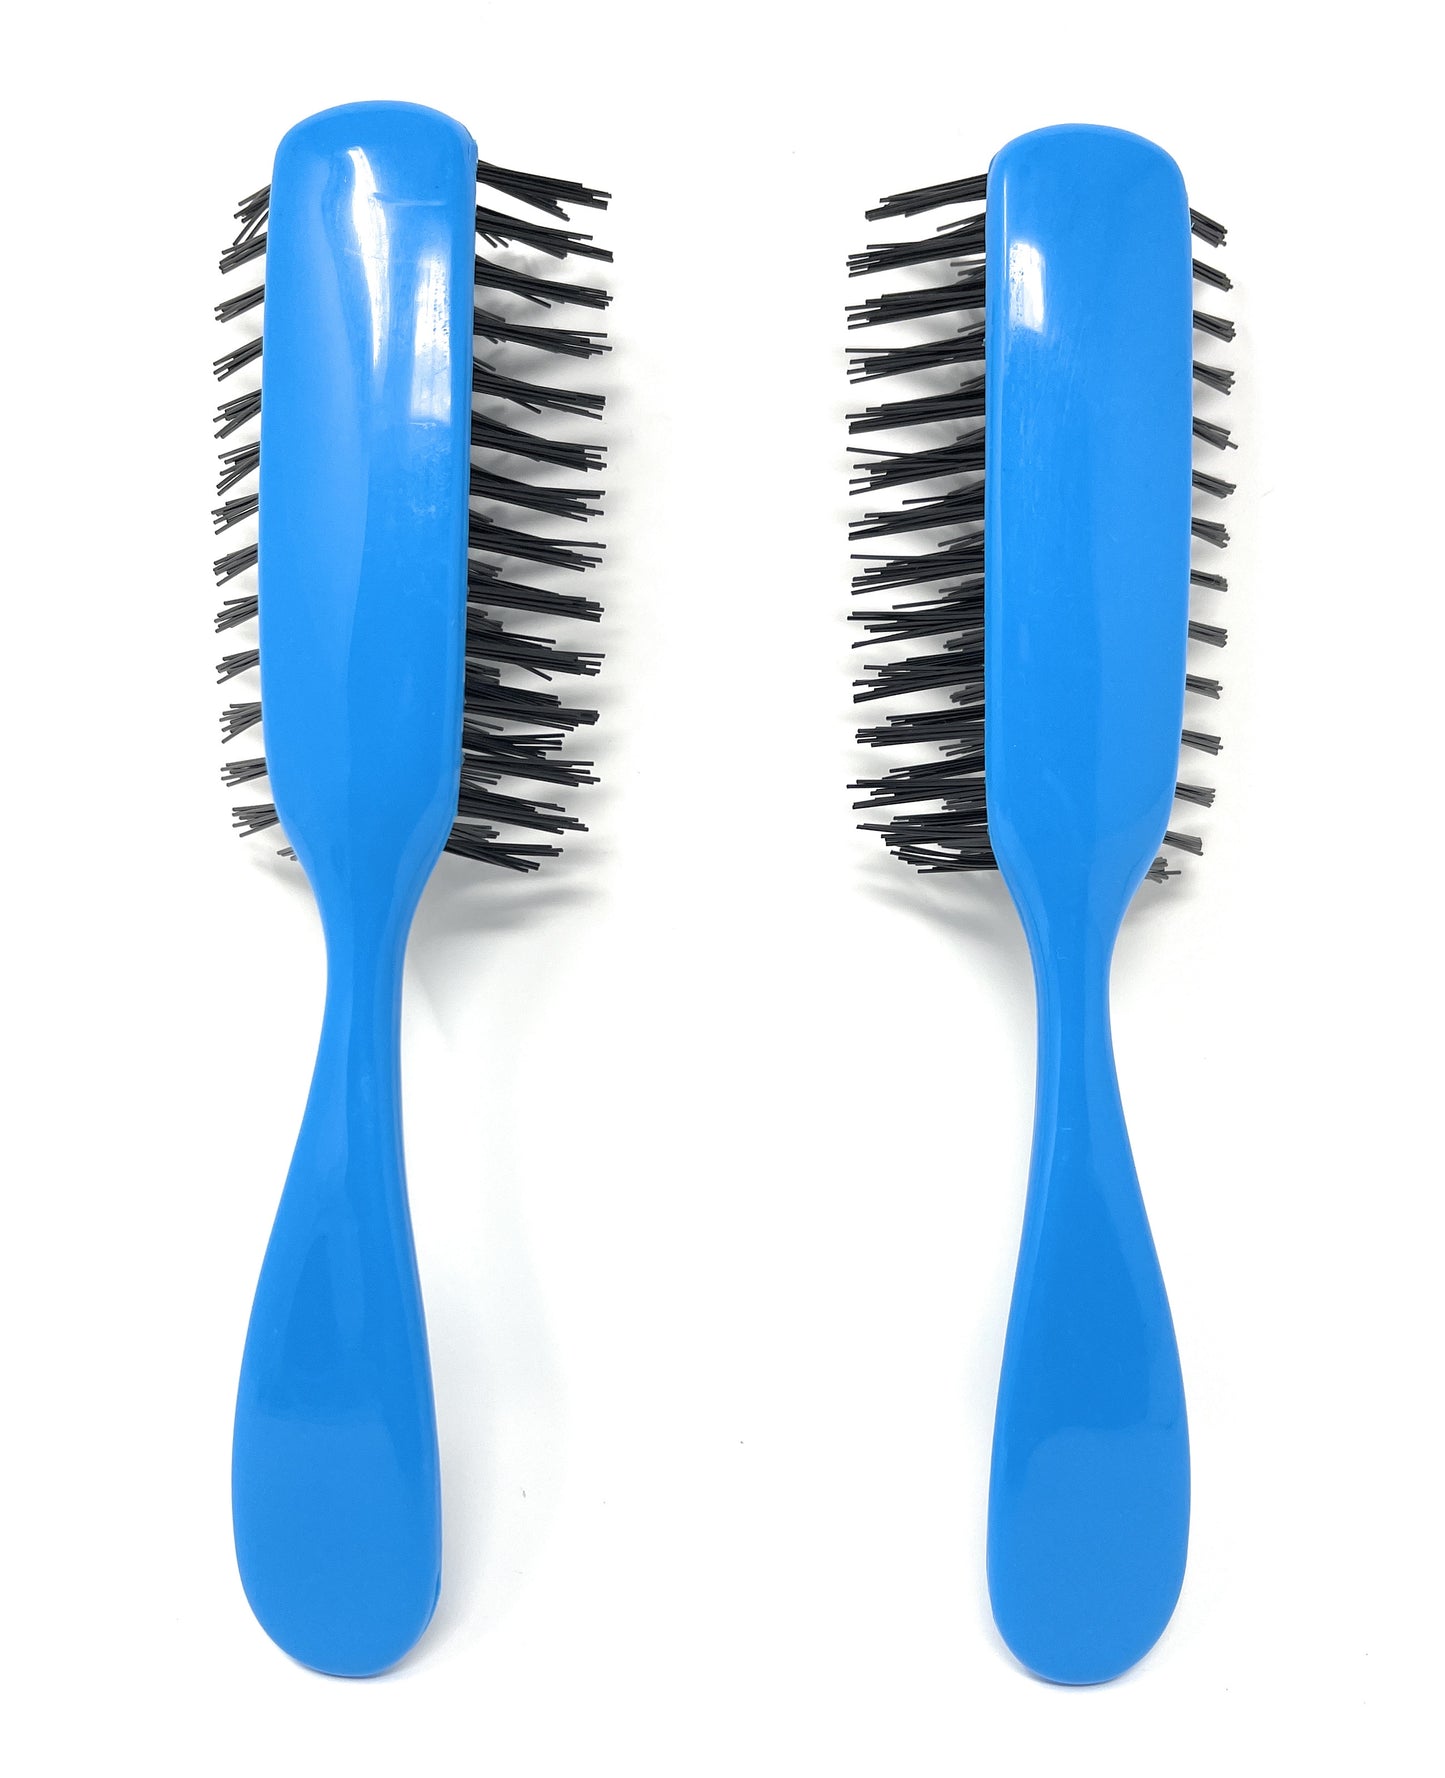 Allegro Combs 100 Nylon Bristles Hair Brush 7-Row Styling Brush Teasing Detangling Salon Blue 2 Pcs.